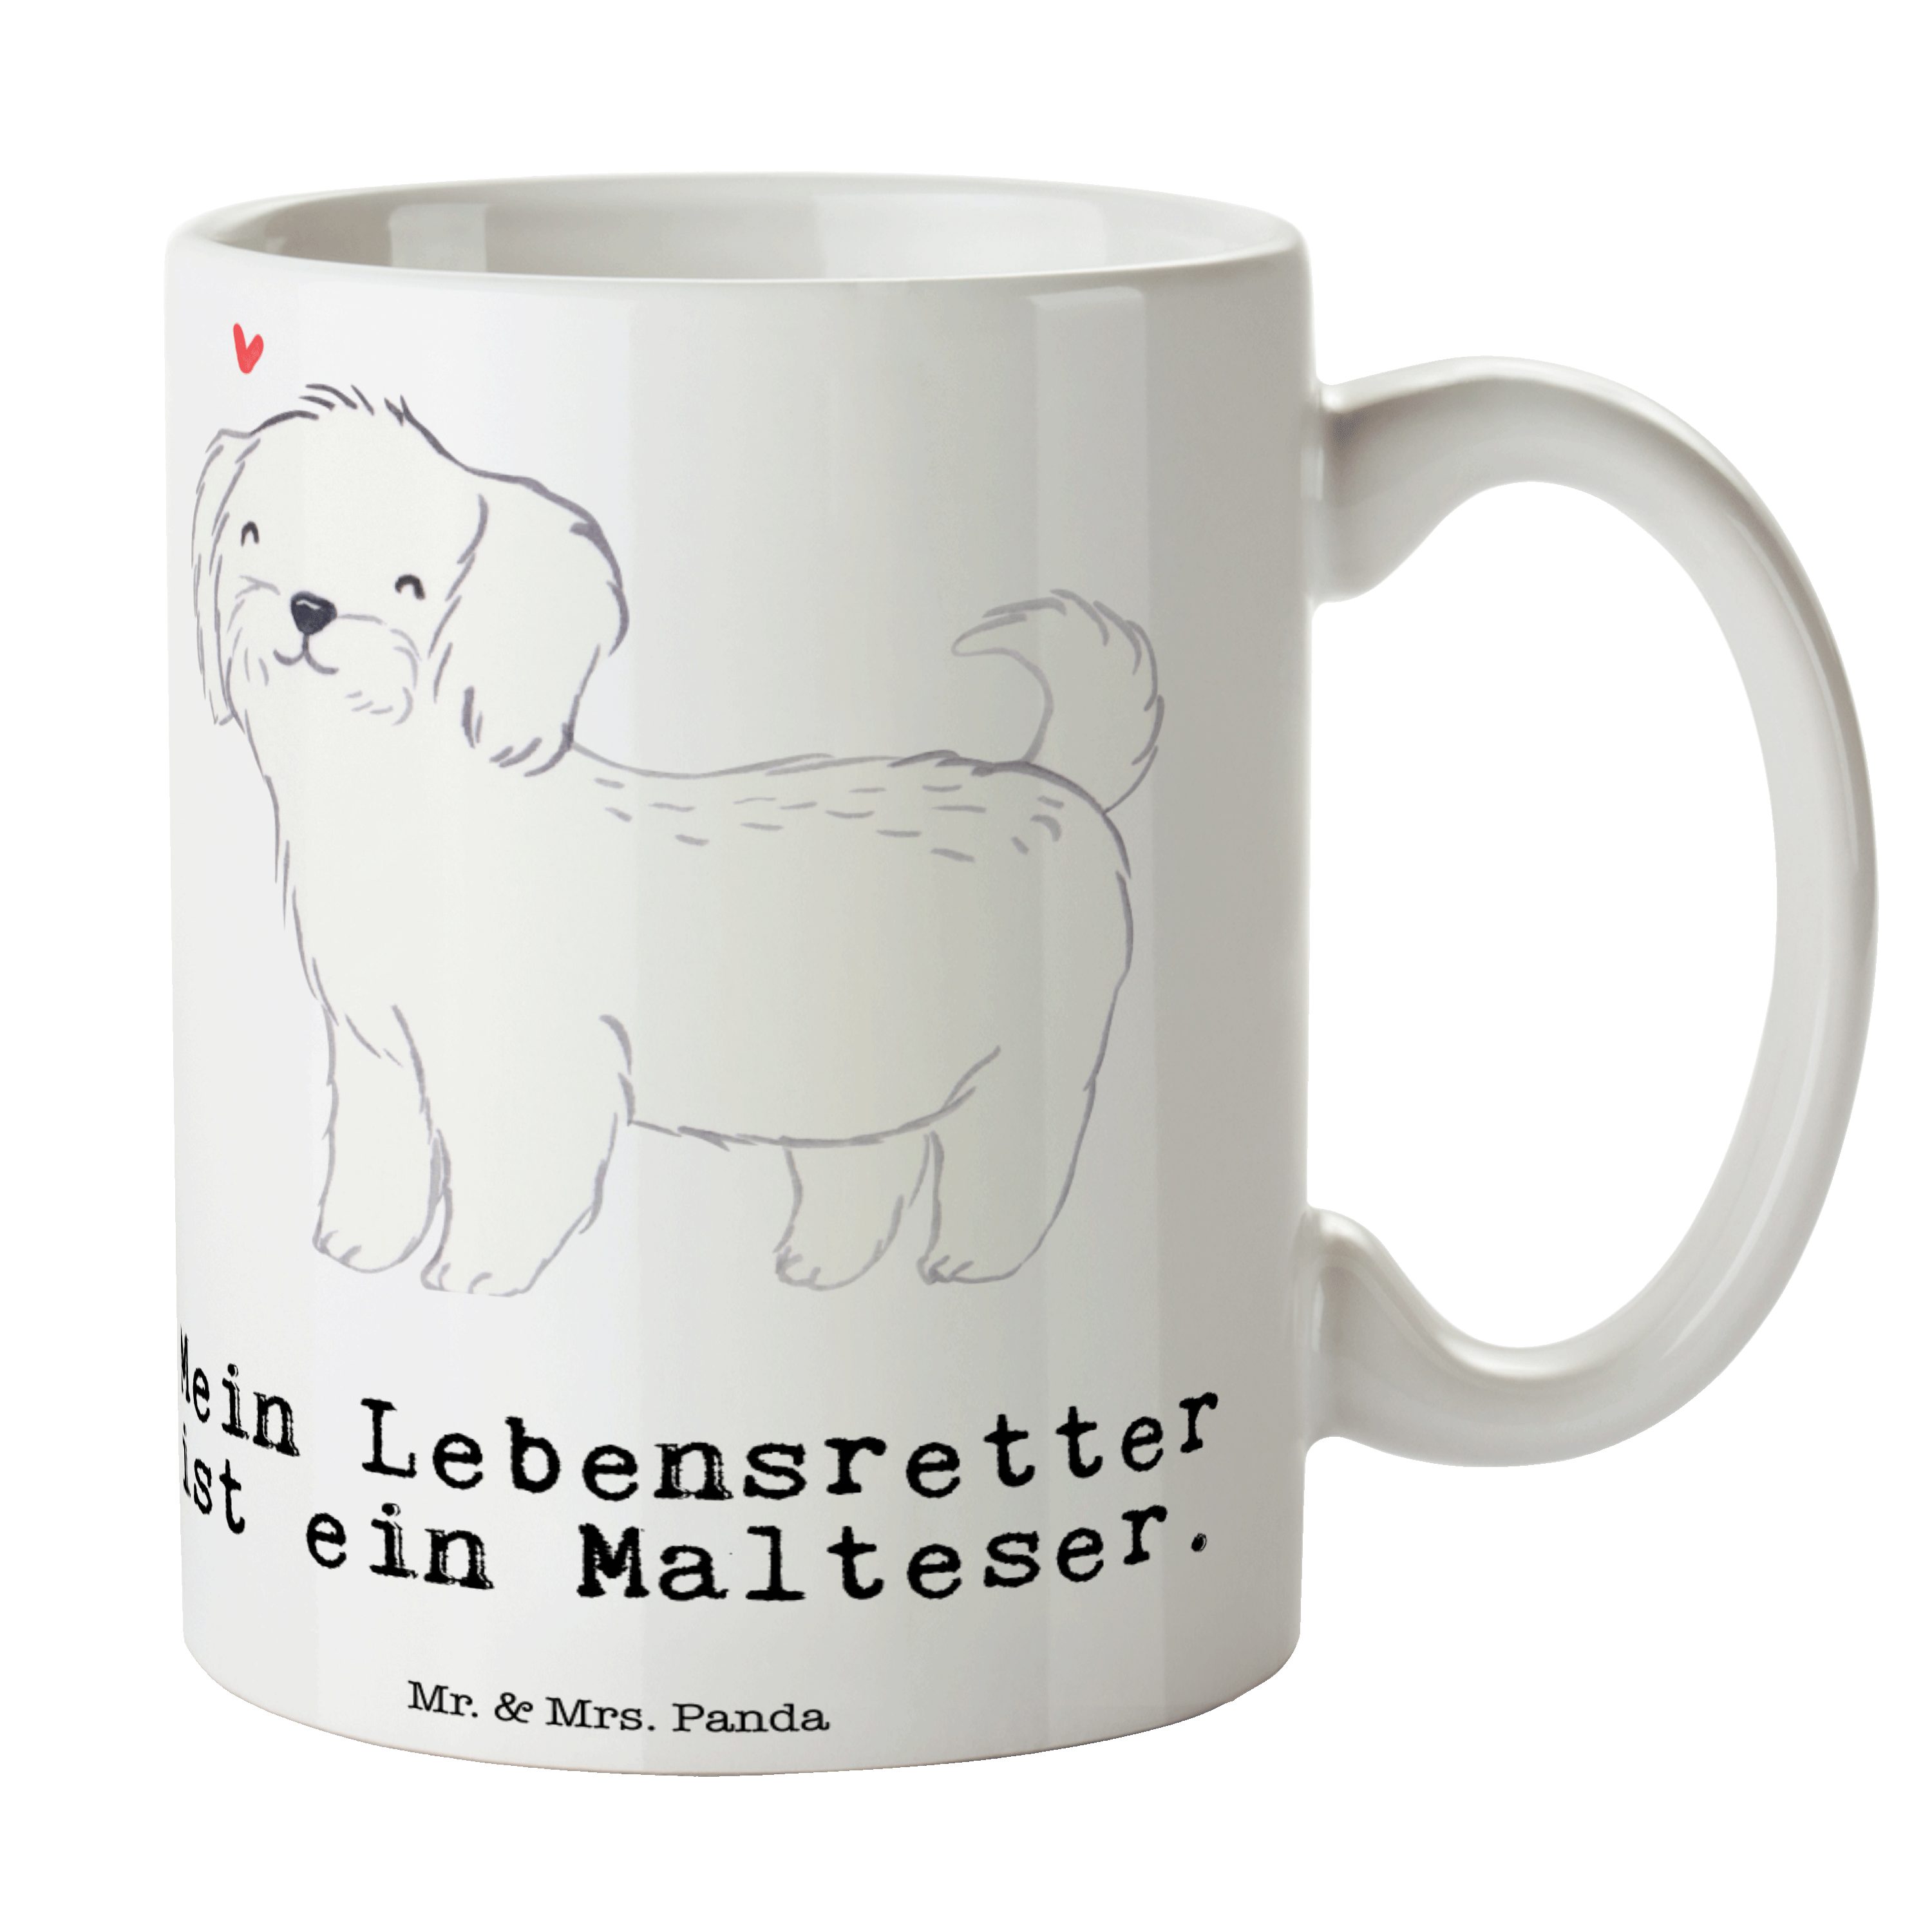 Mr. & Mrs. Panda Tasse Malteser Lebensretter - Weiß - Geschenk, Kaffeetasse, Hund, Büro Tass, Keramik